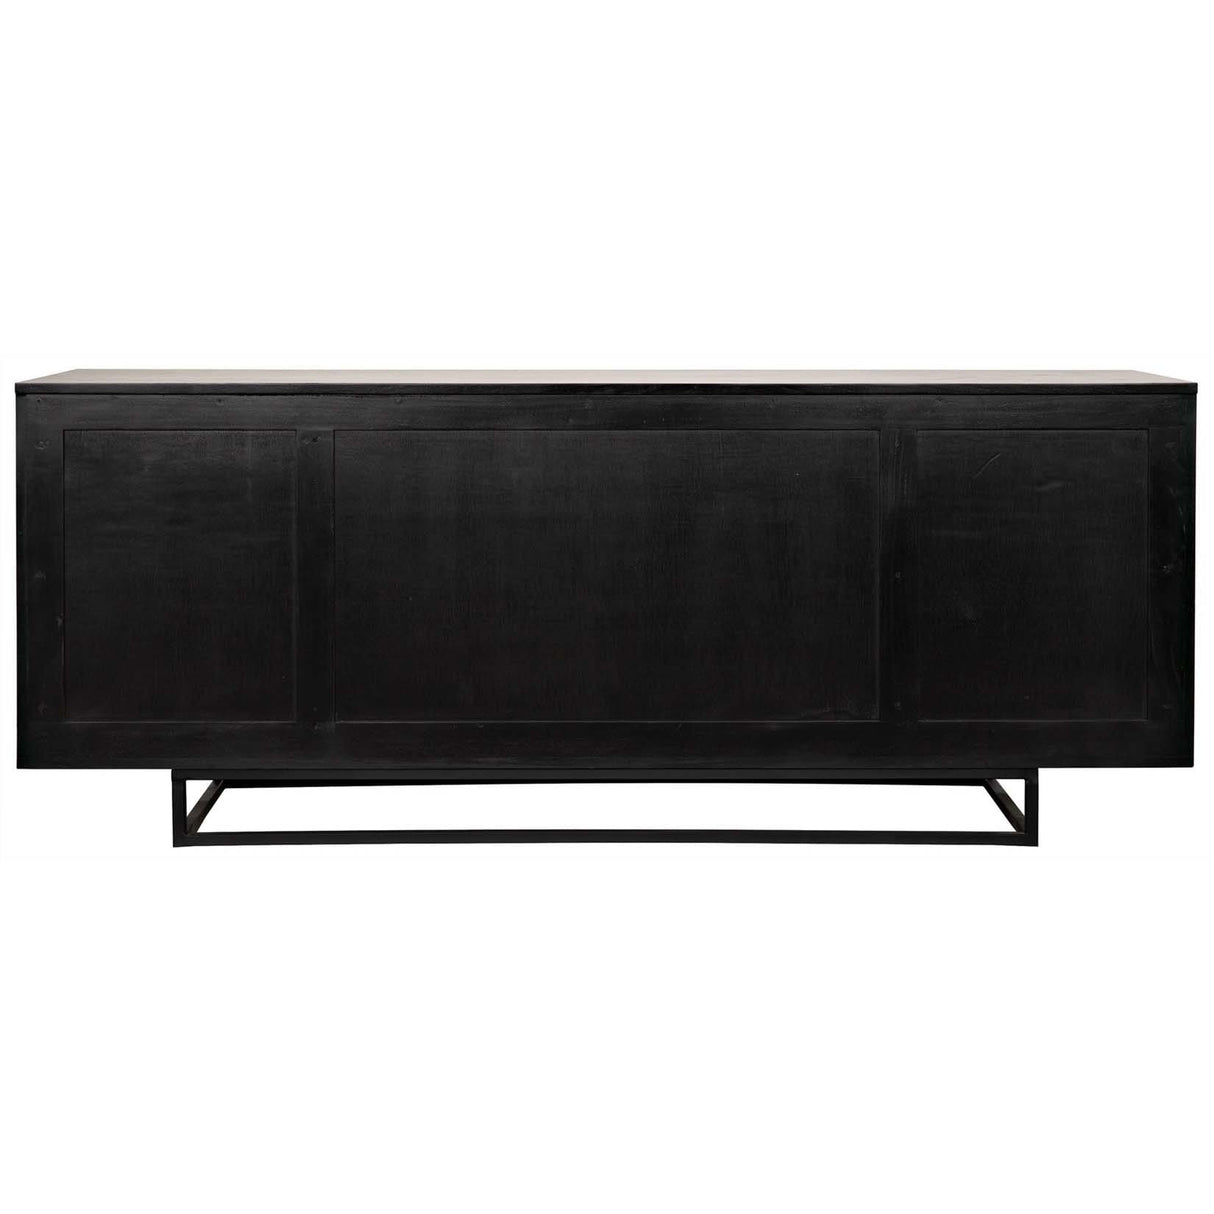 Noir Ra Sideboard Furniture noir-GCON280HBT 00842449118645